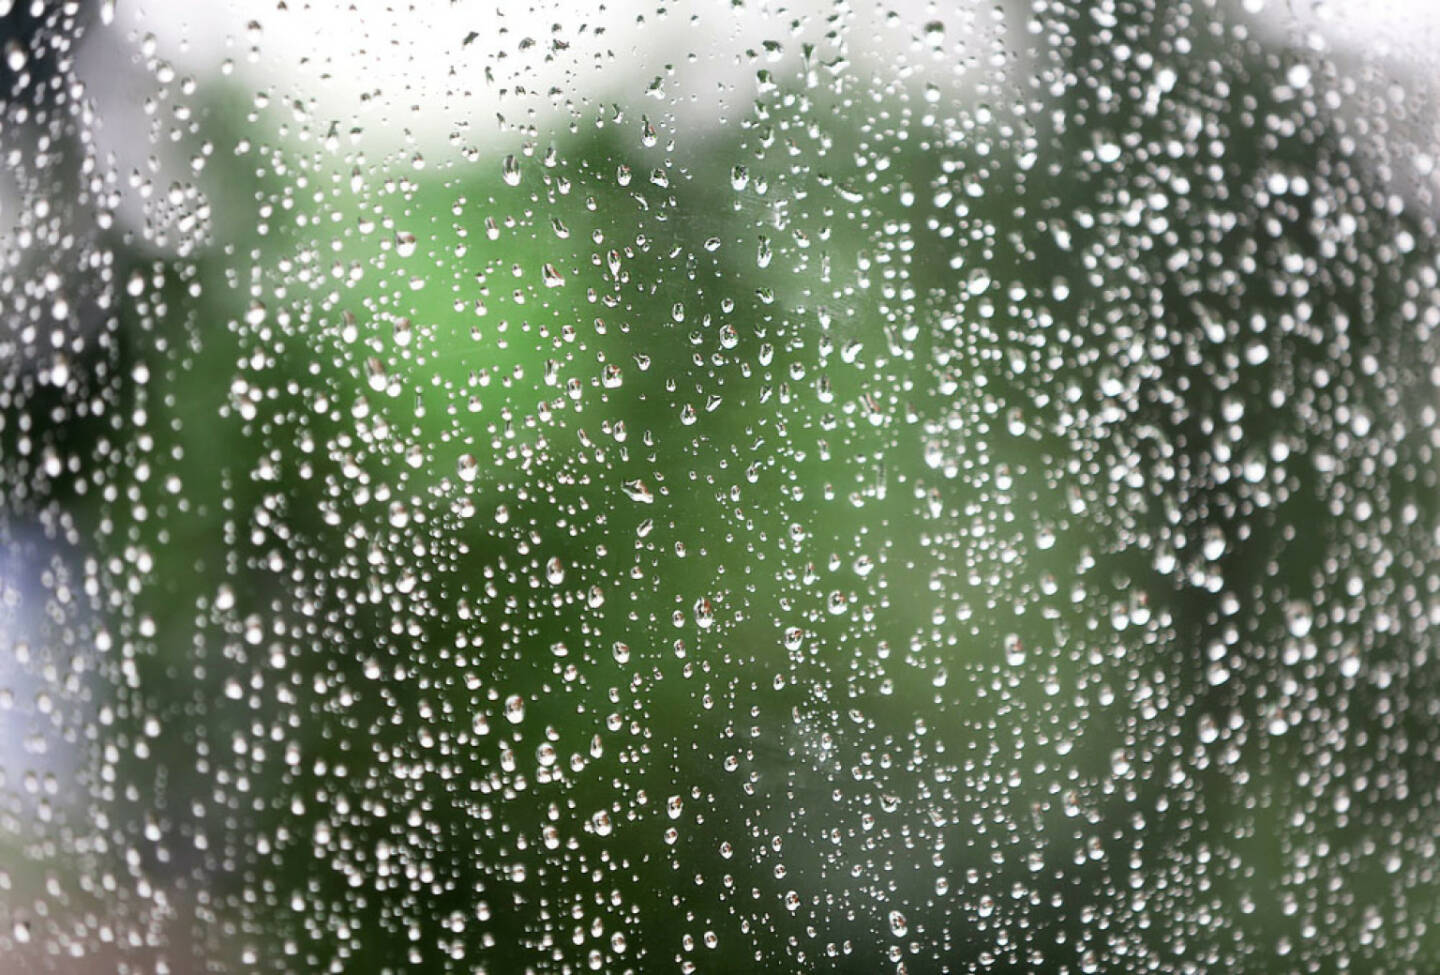 Regen, Regentropfen, Wasser, Abkühlung, http://www.shutterstock.com/de/pic-198052550/stock-photo-rain-water-drops-on-window-glass.html (Bild: shutterstock.com)